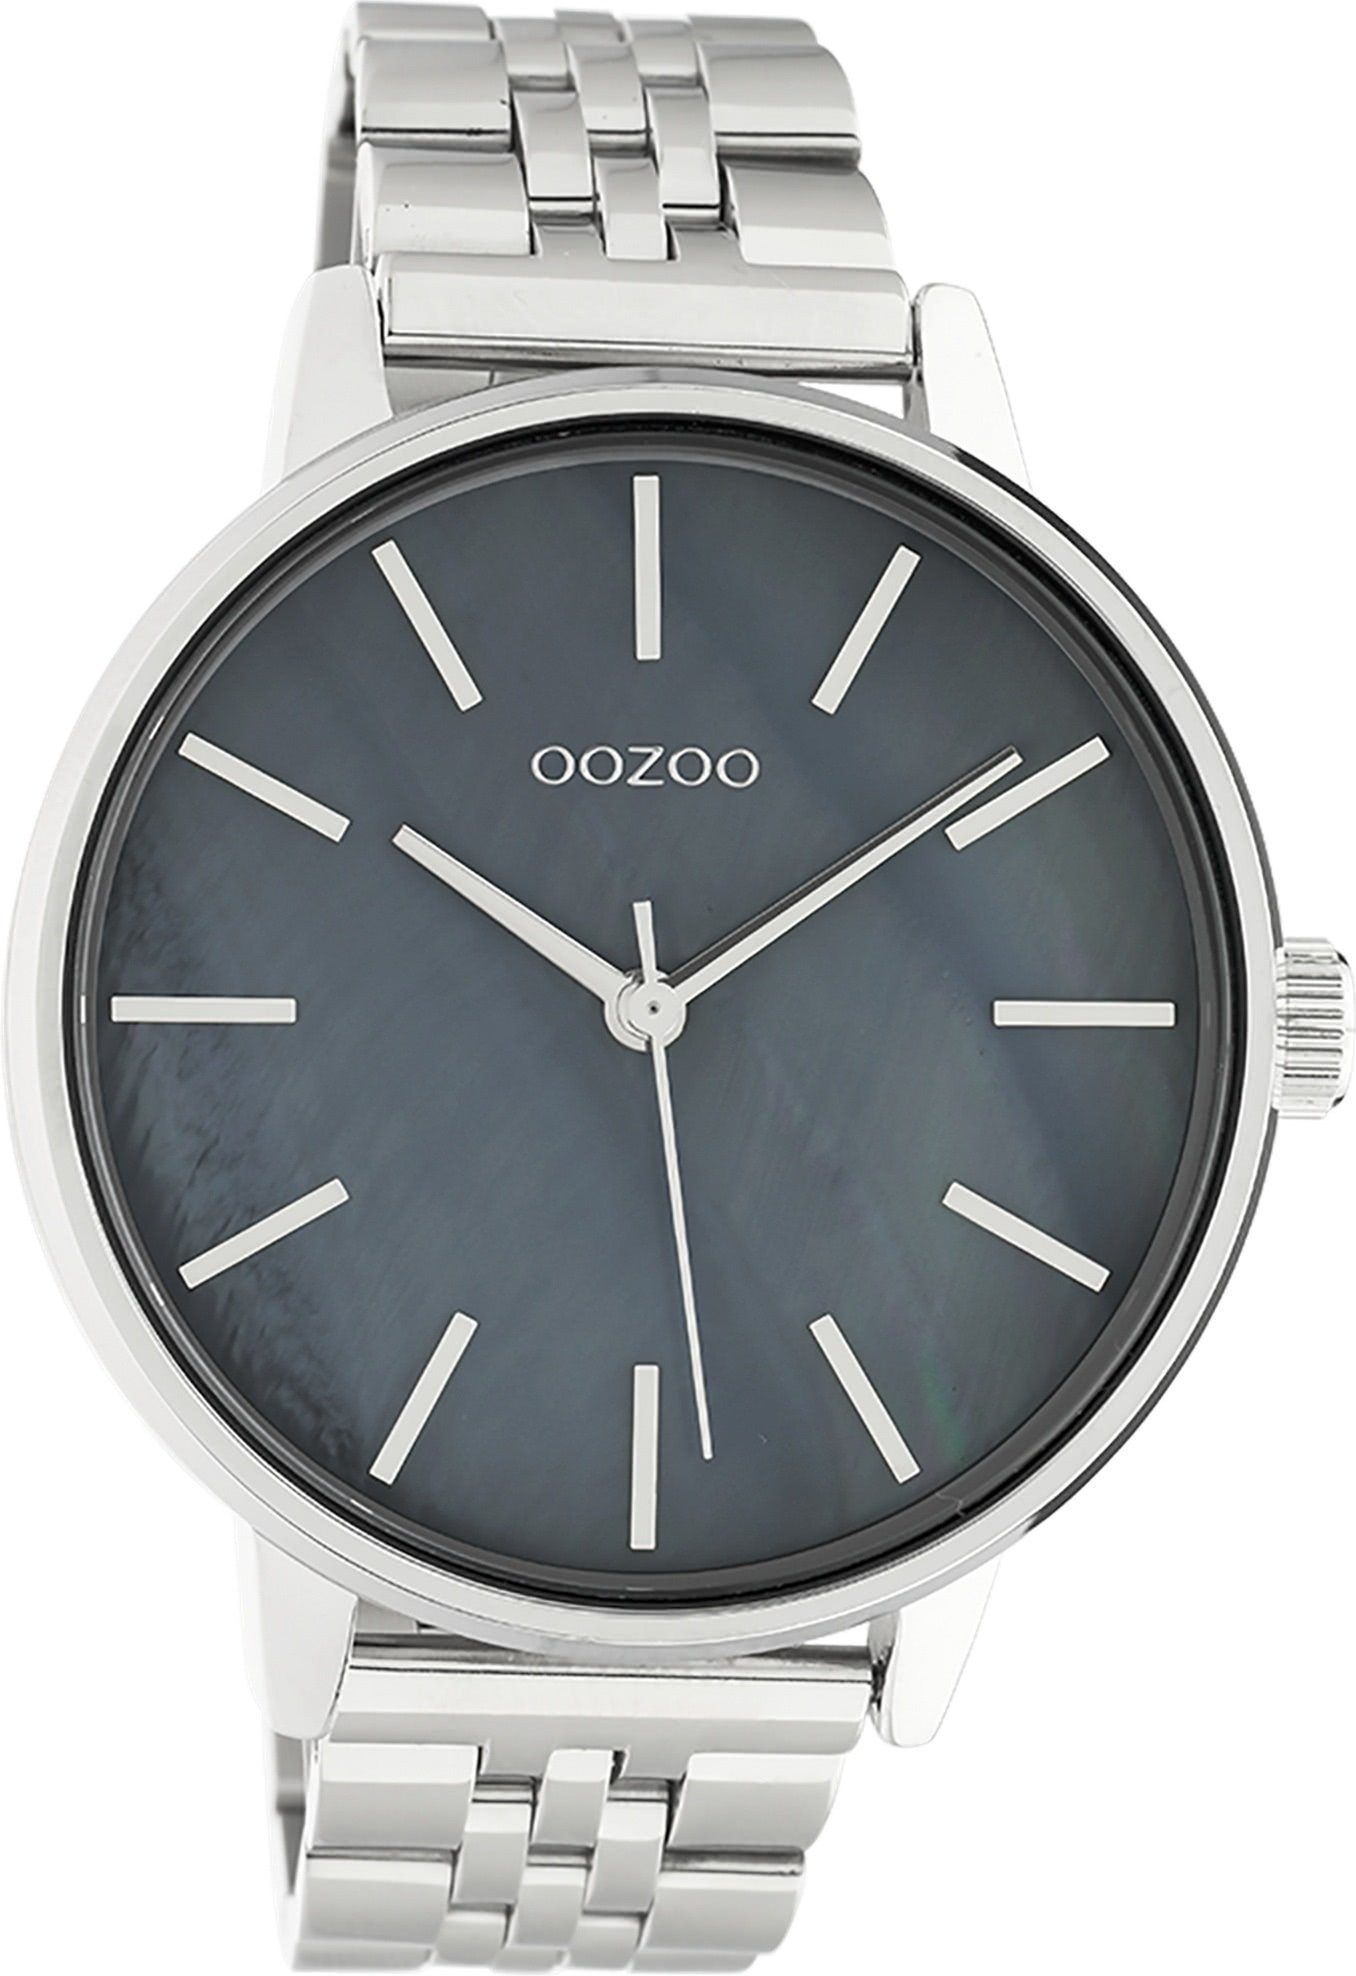 rund, Armbanduhr 40mm) Analog, Oozoo Damen (ca. OOZOO Edelstahlarmband, Quarzuhr Fashion-Style Damenuhr Timepieces groß